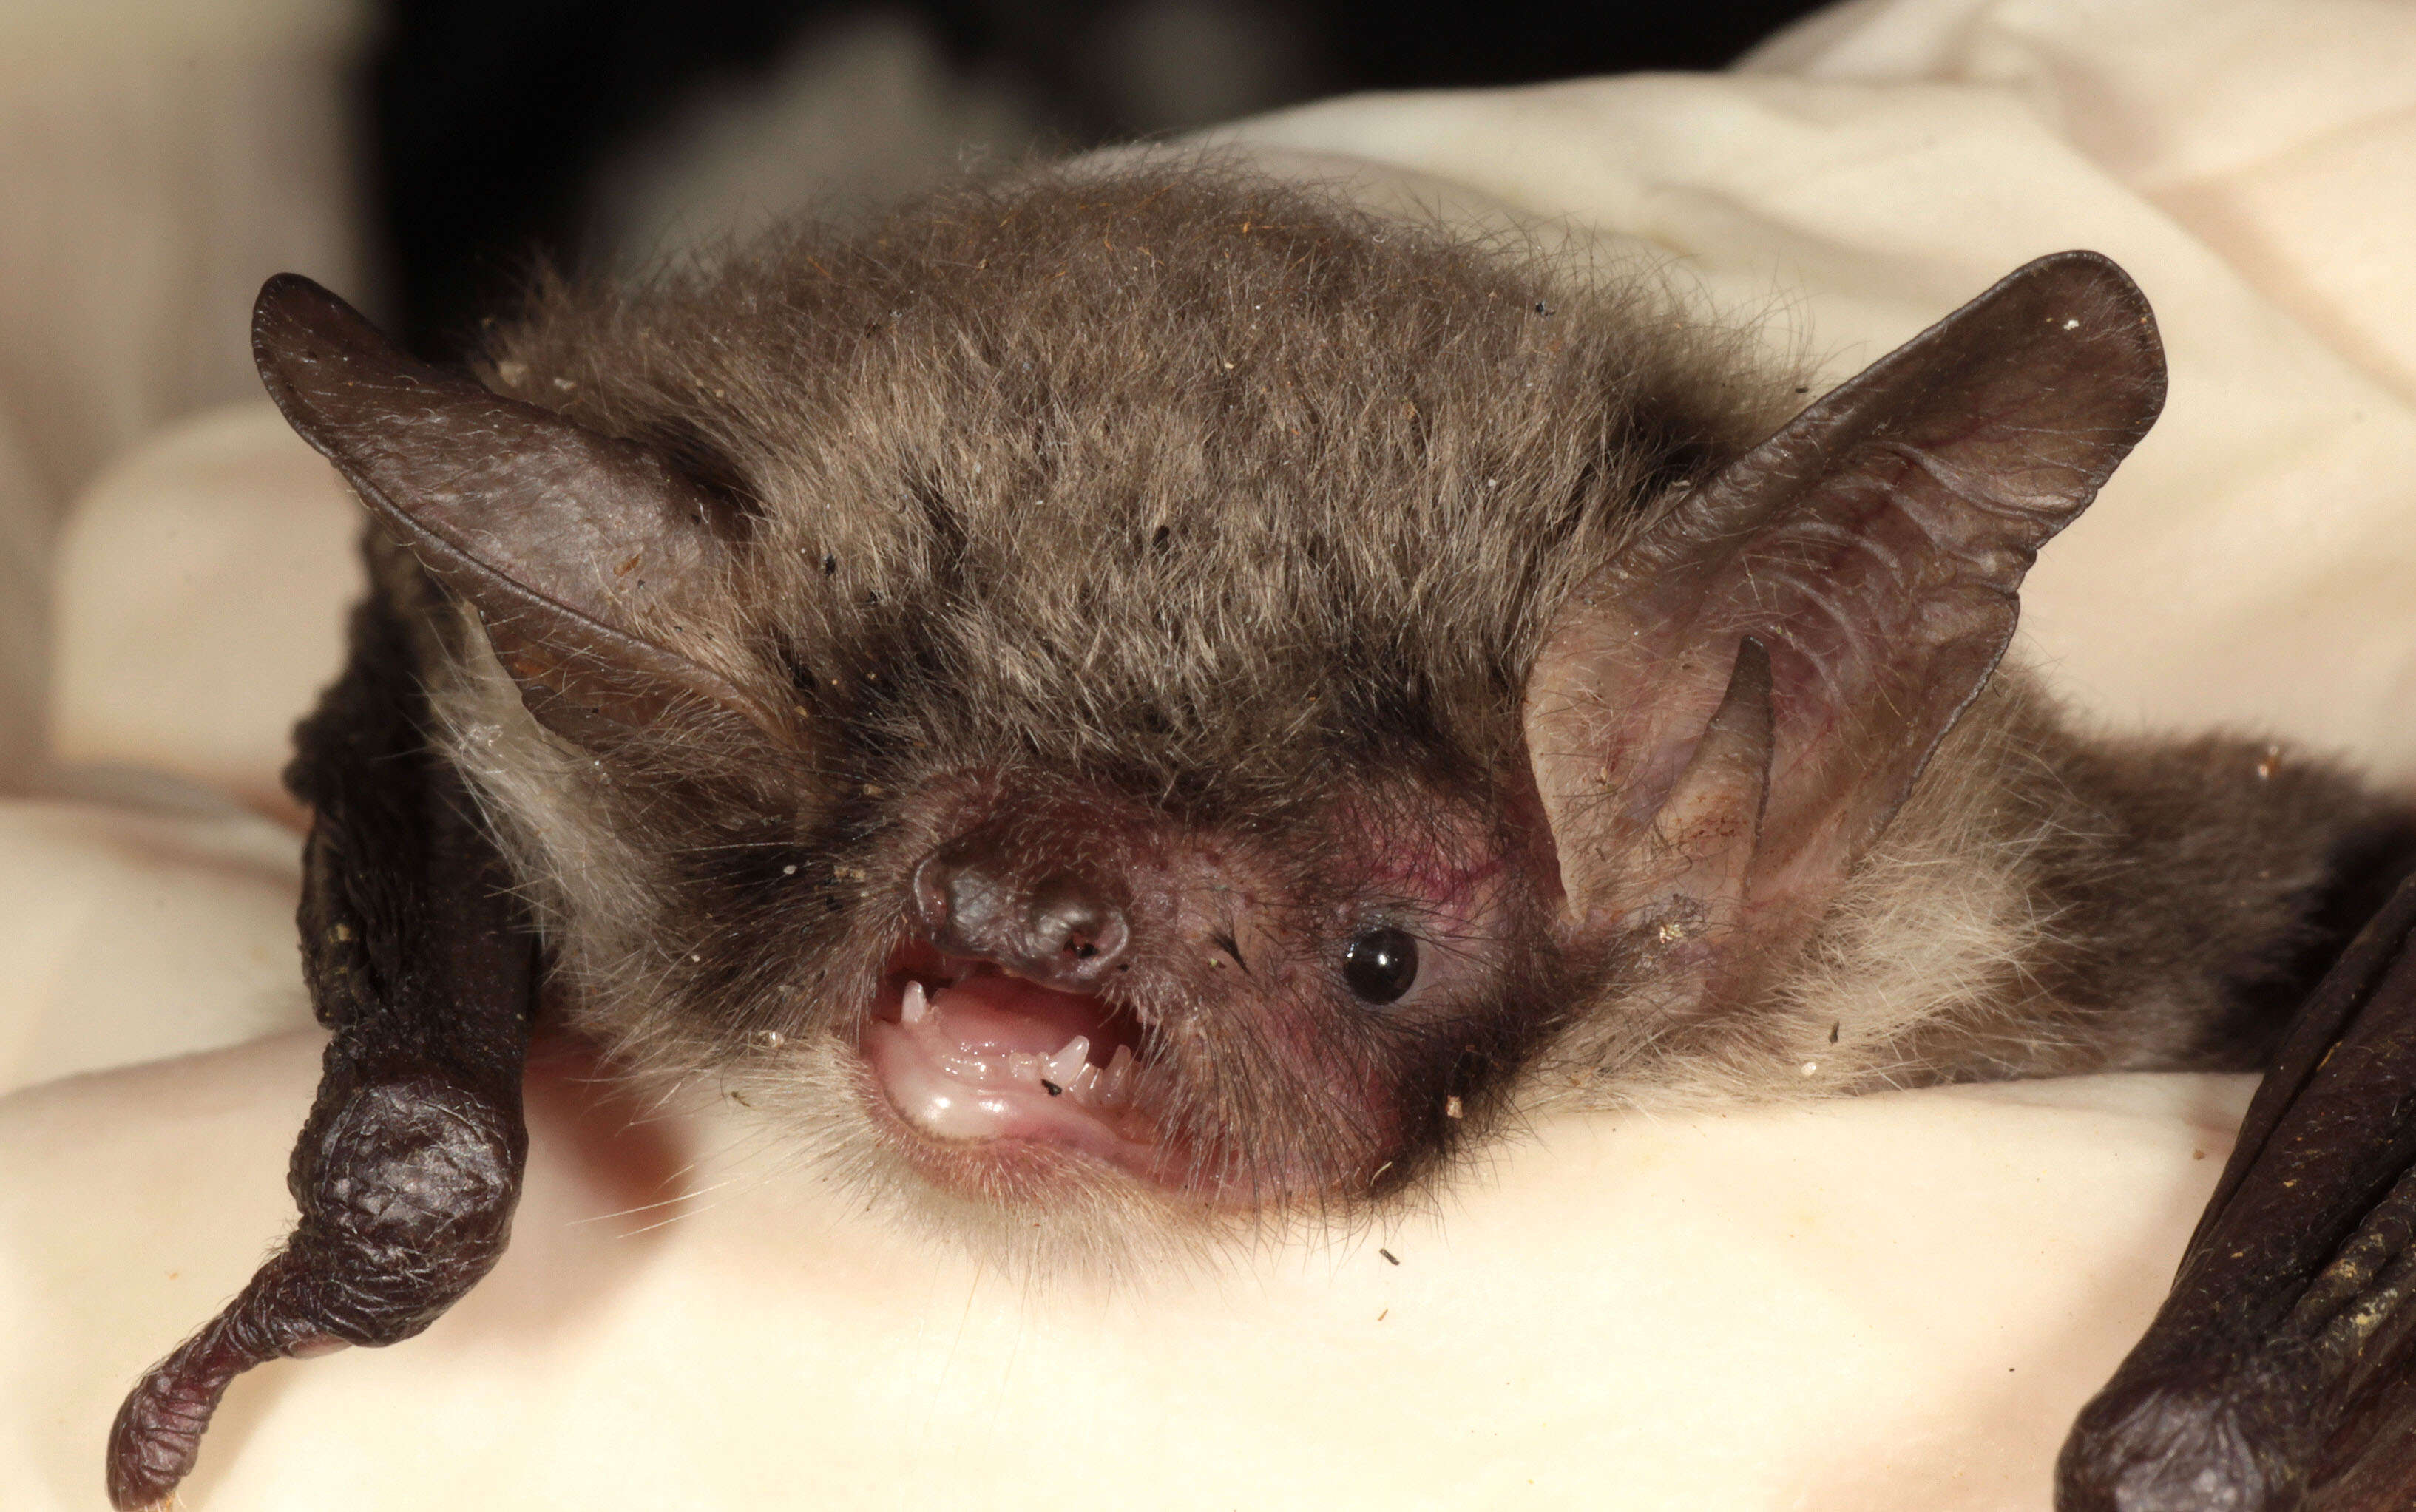 Image of Natterer's Bat